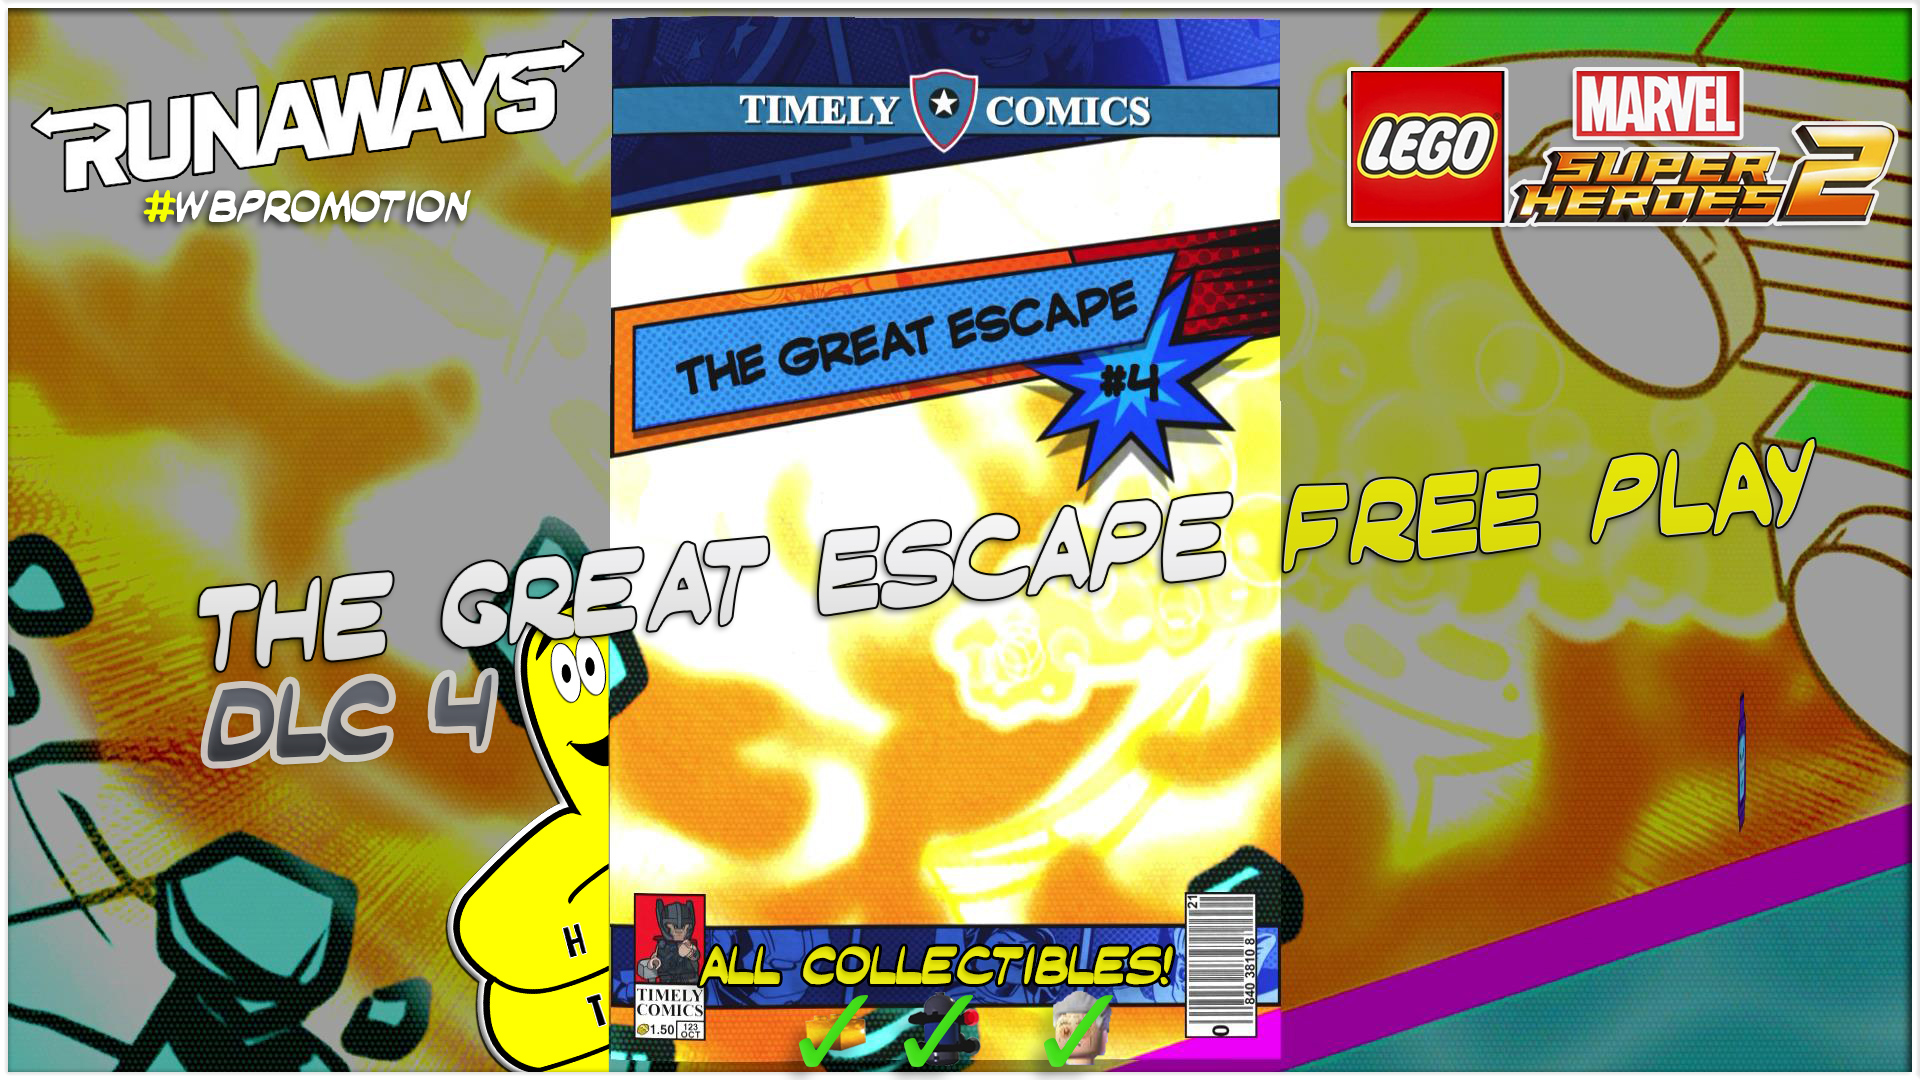 Lego Marvel Superheroes 2: The Great Escape (Runaways) DLC FREE PLAY – HTG